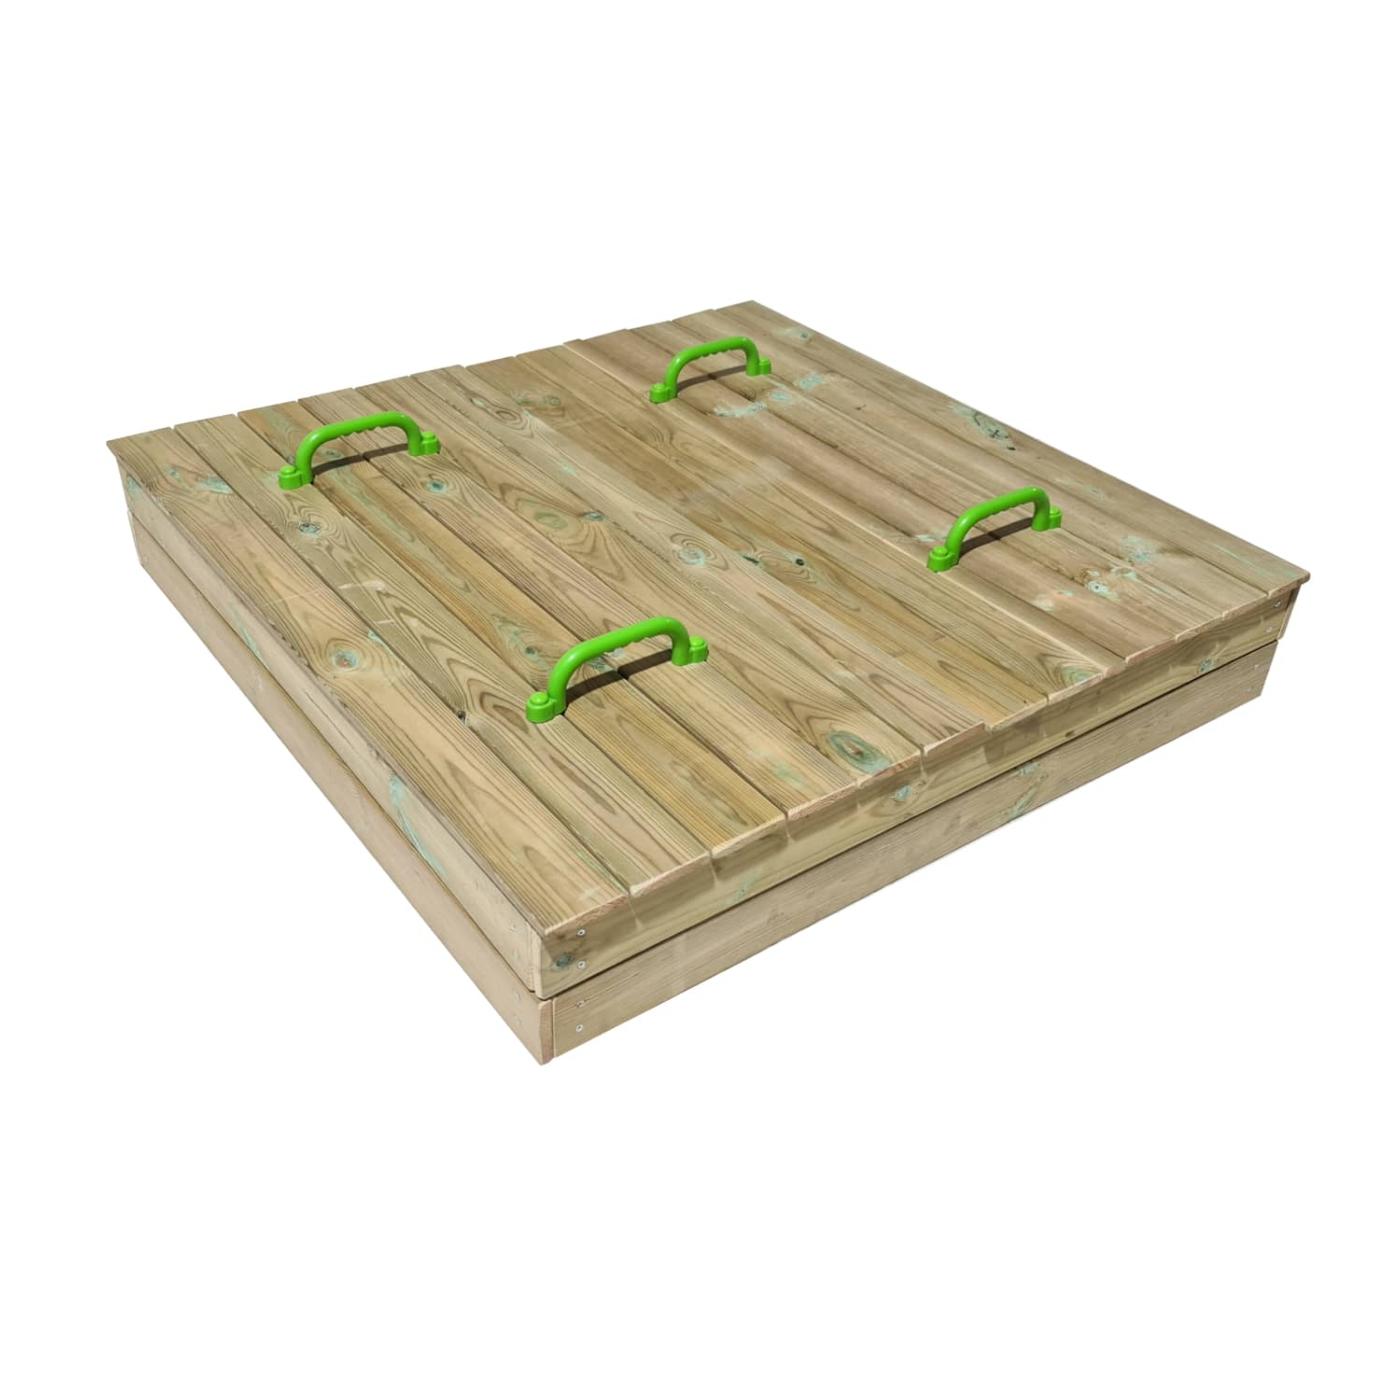 Caja de arena infantil con tapa de madera MASGAMES OBEN